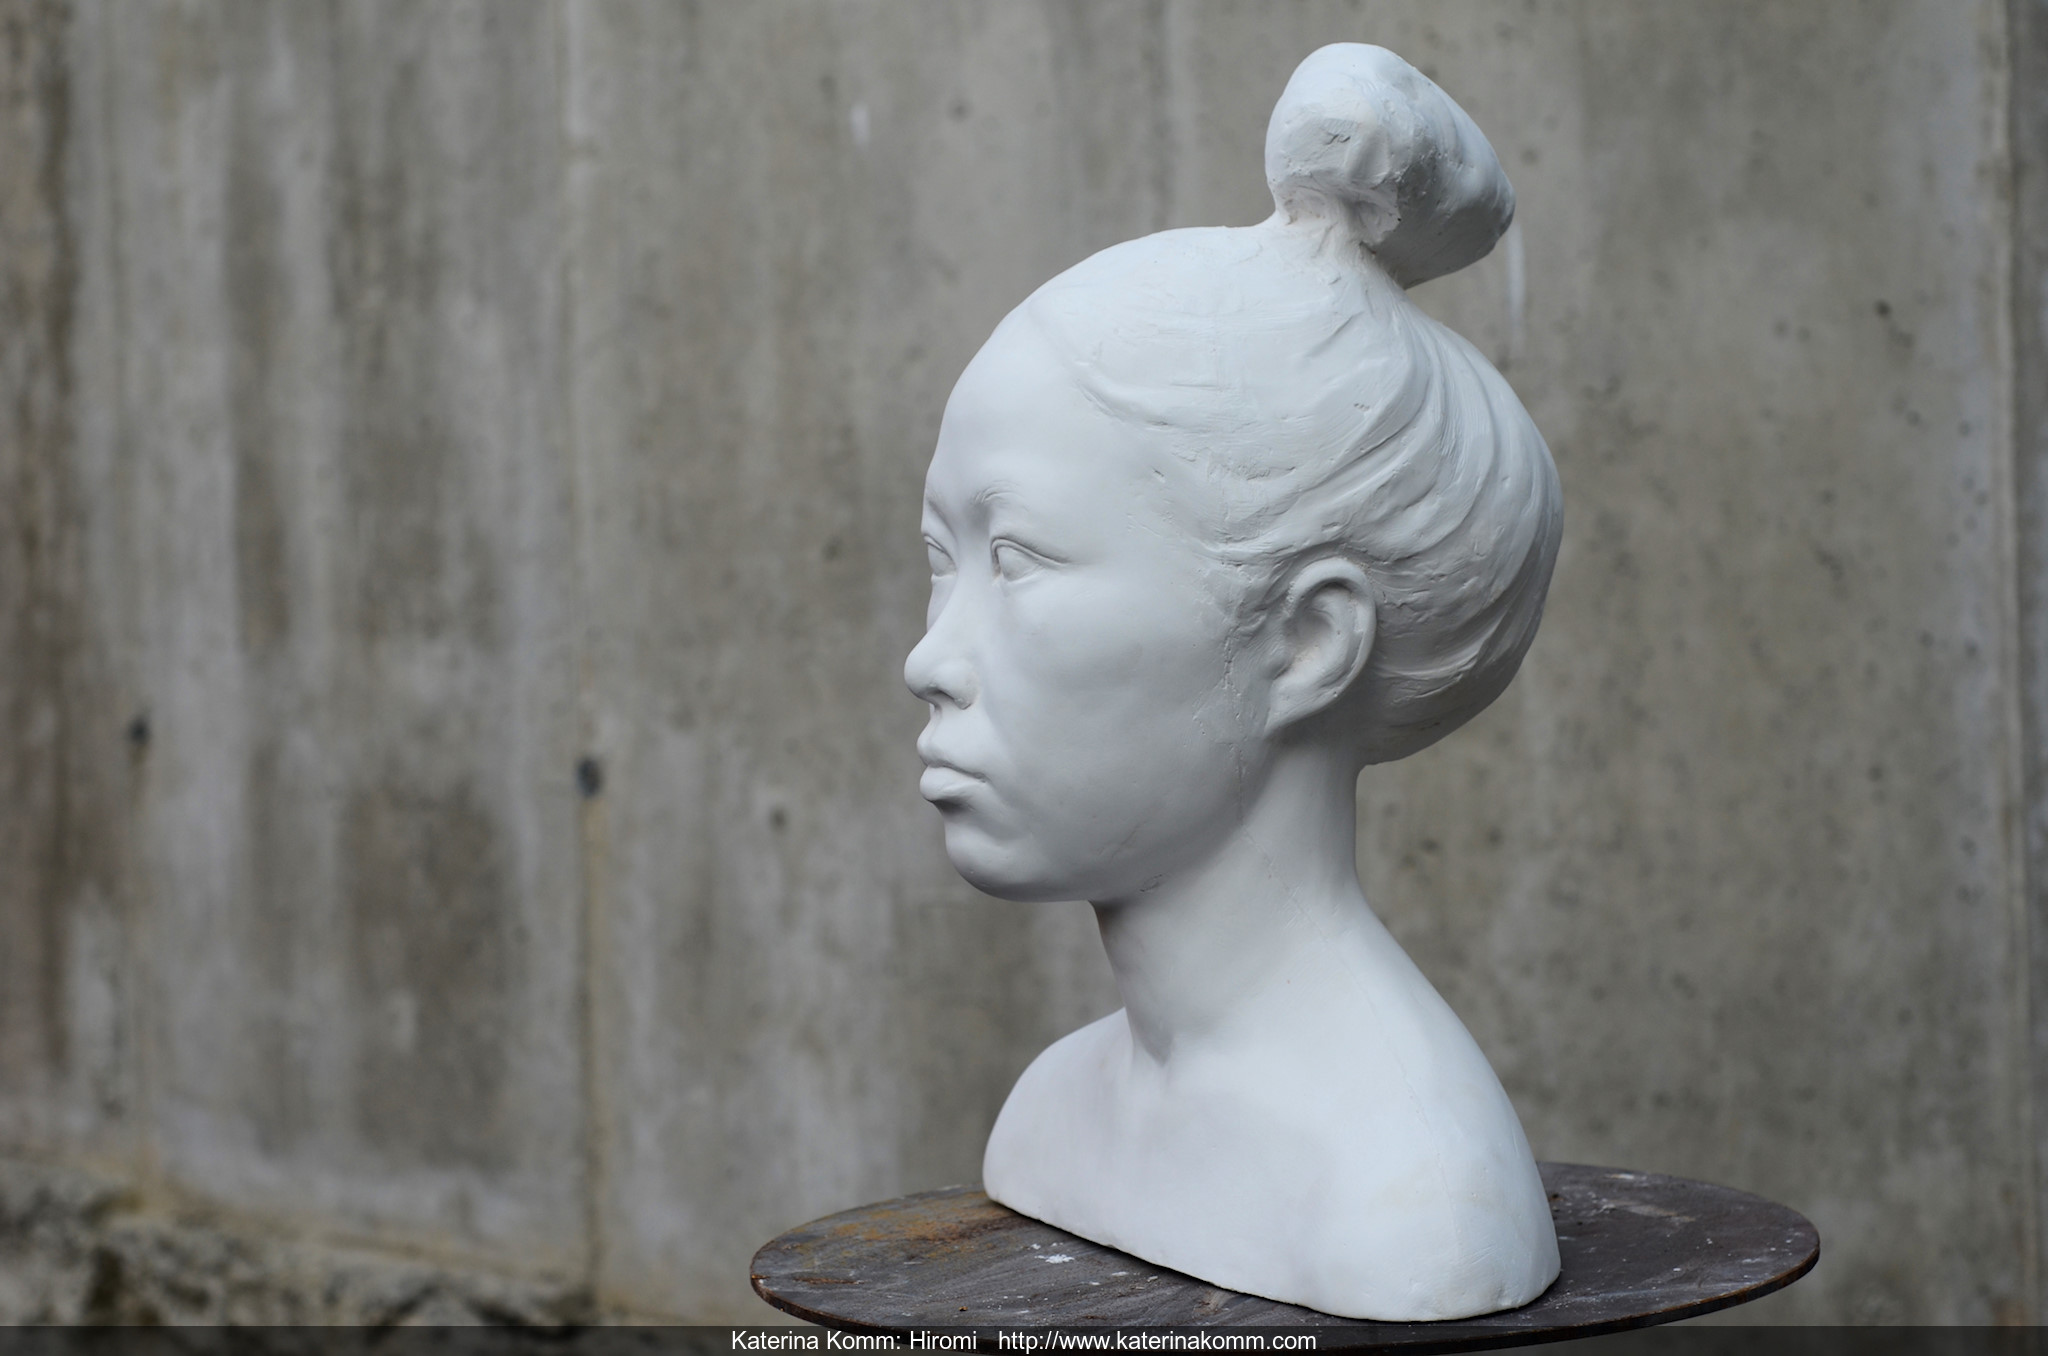 Katerina Komm, sculpture, WORKS: Hiromi